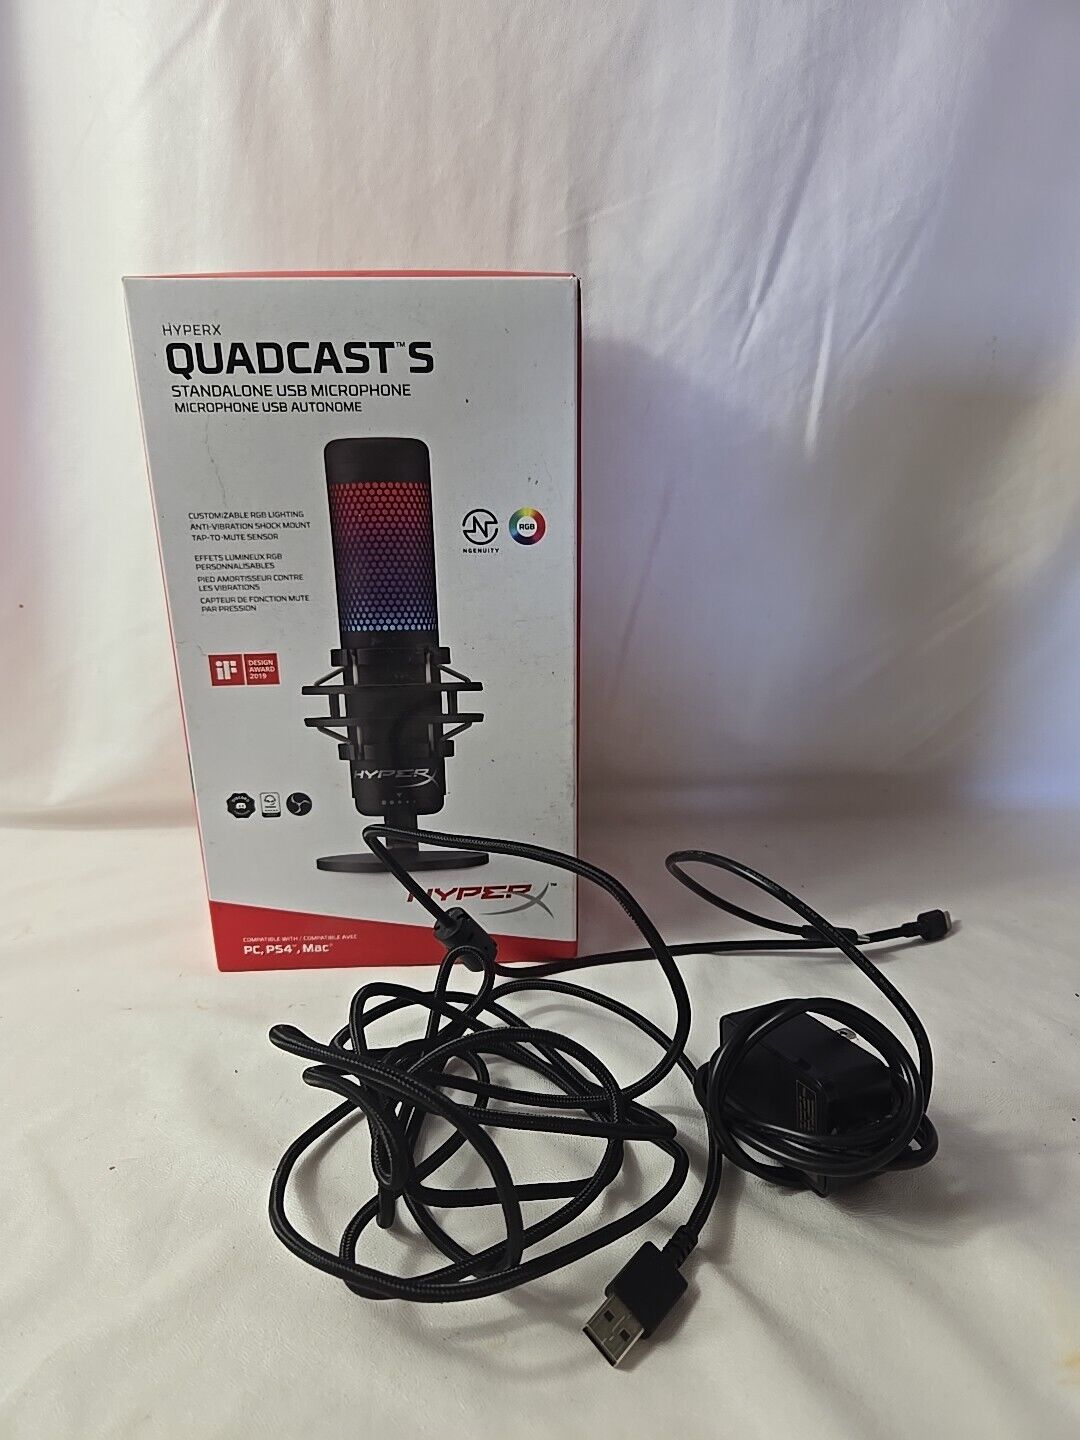 HyperX QuadCast S - USB Microphone - RGB Lighting Used Once